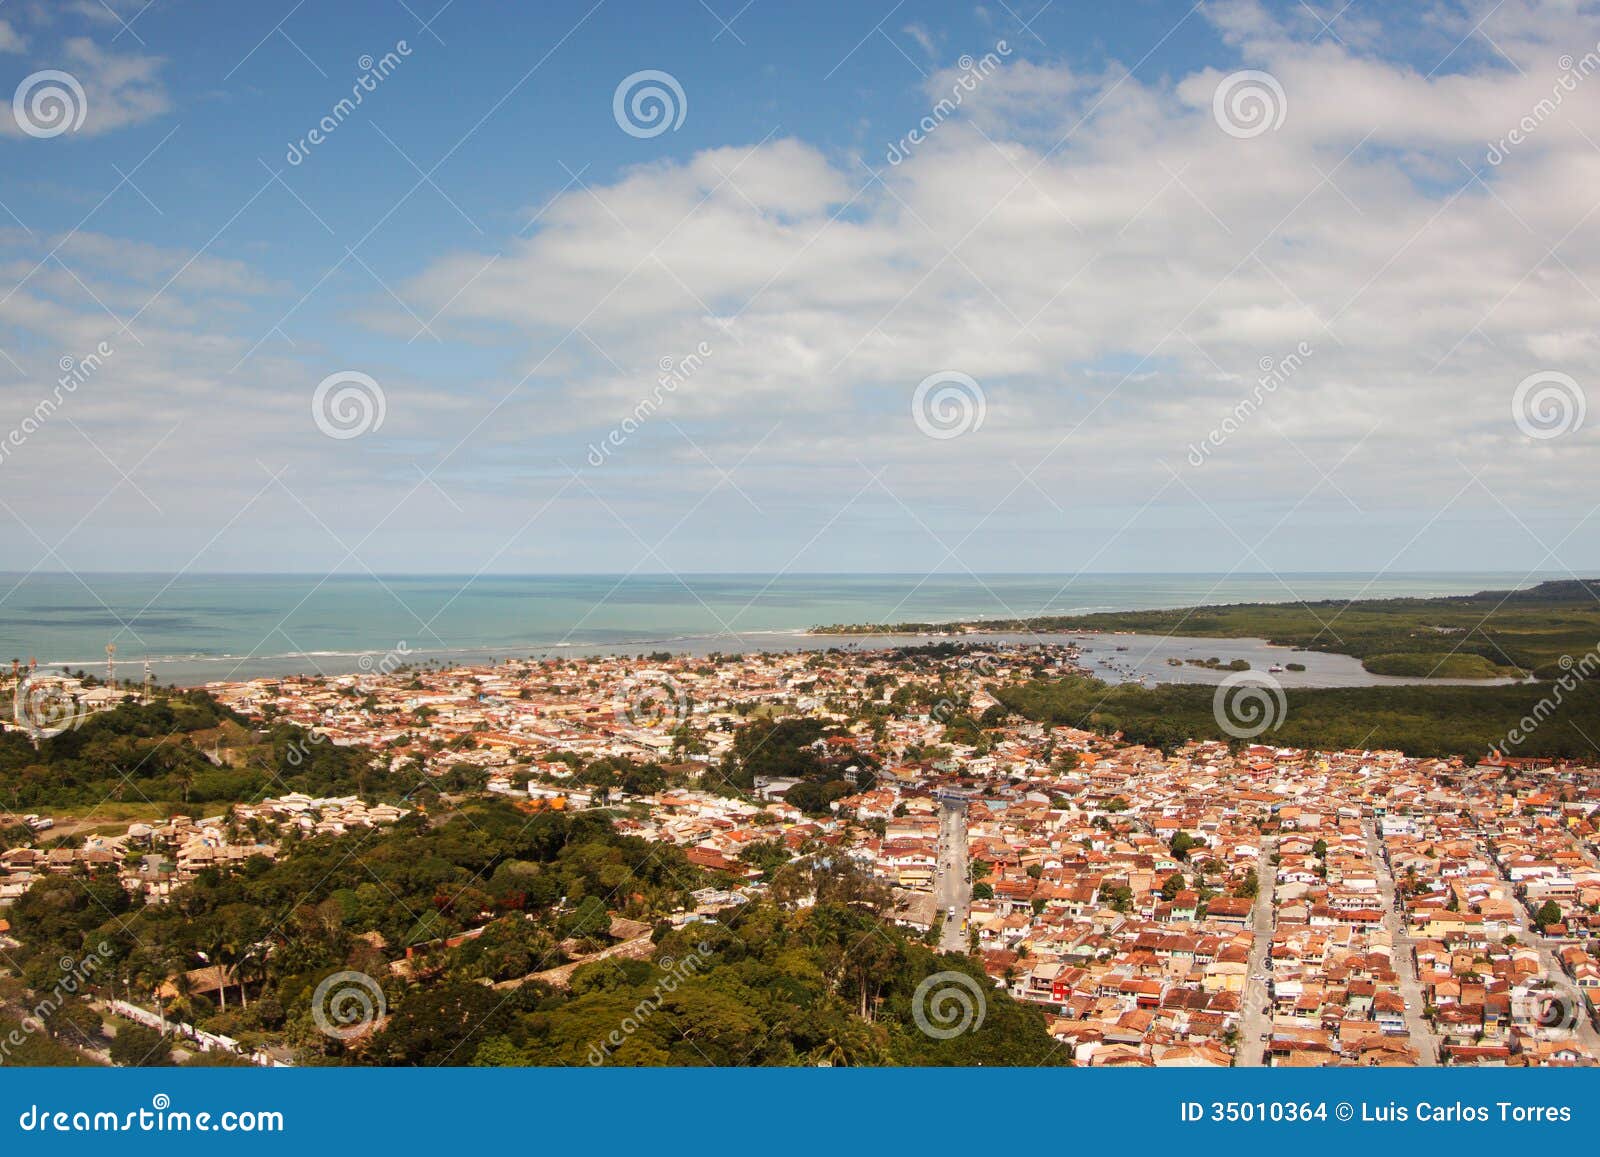 porto seguro - bahia, brasil, aerial view.